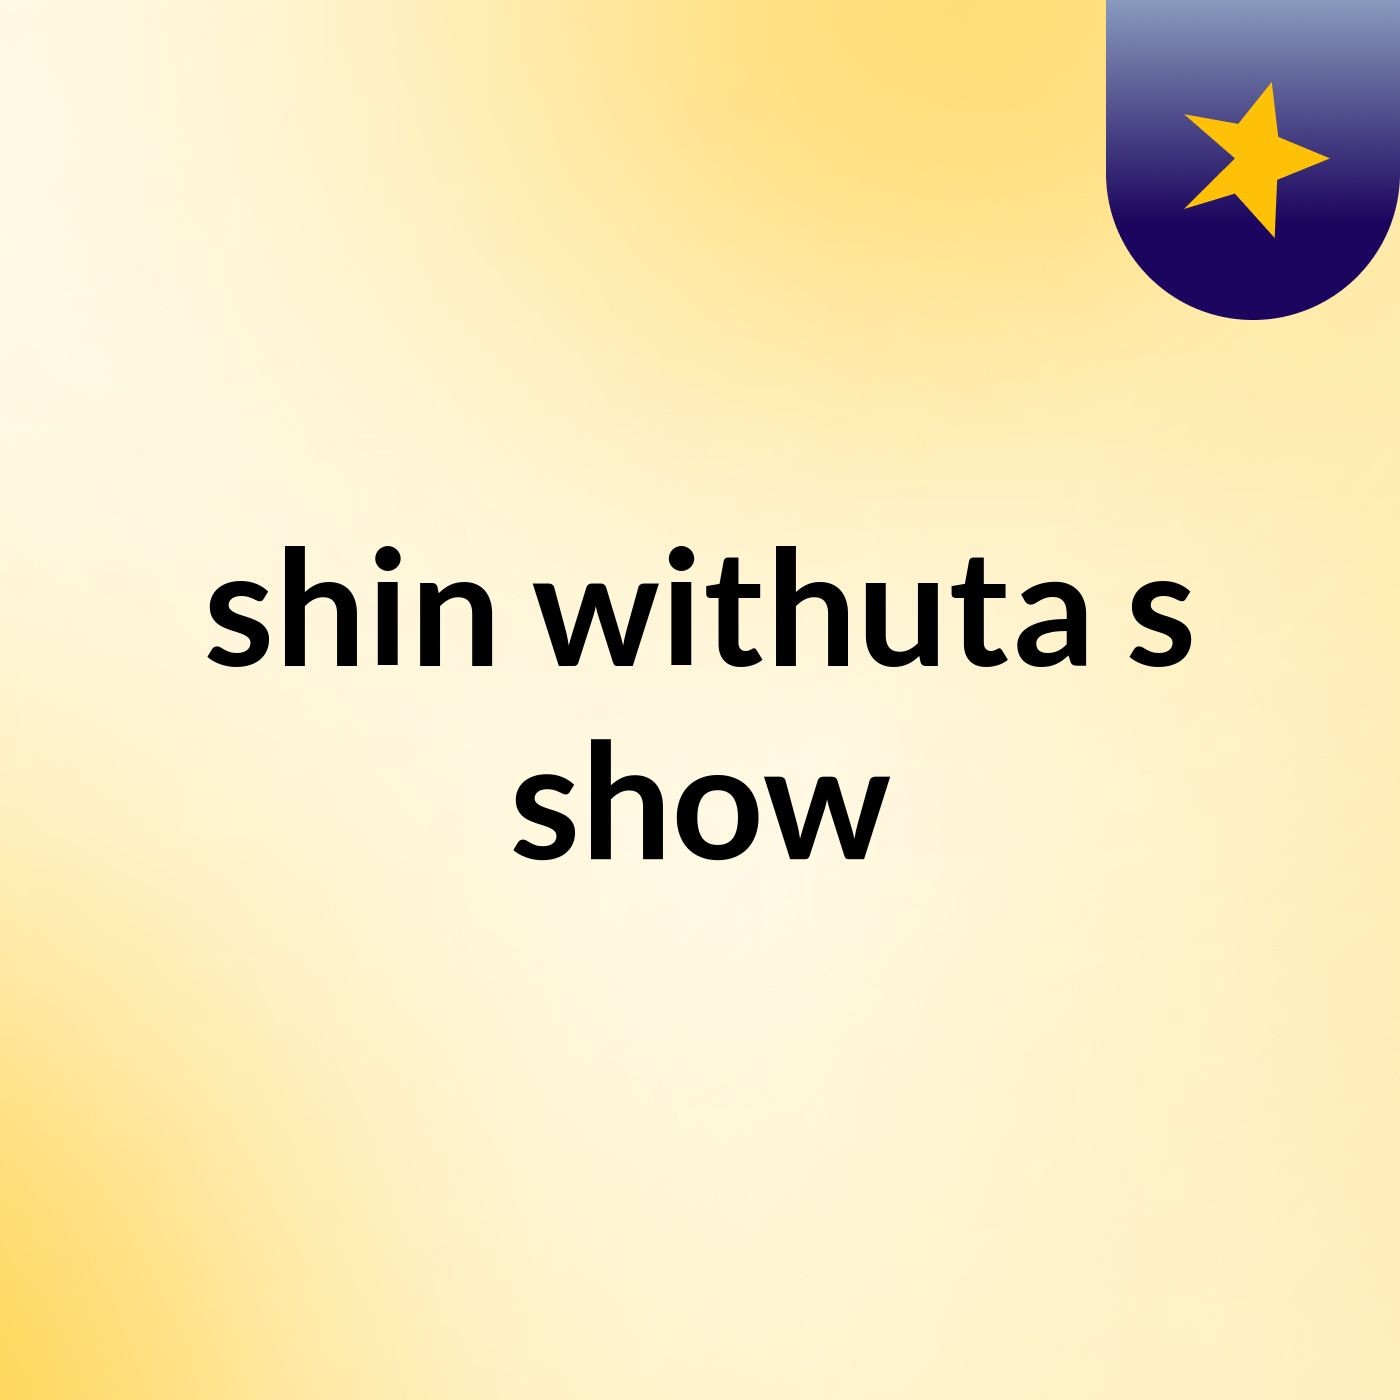 shin withuta's show